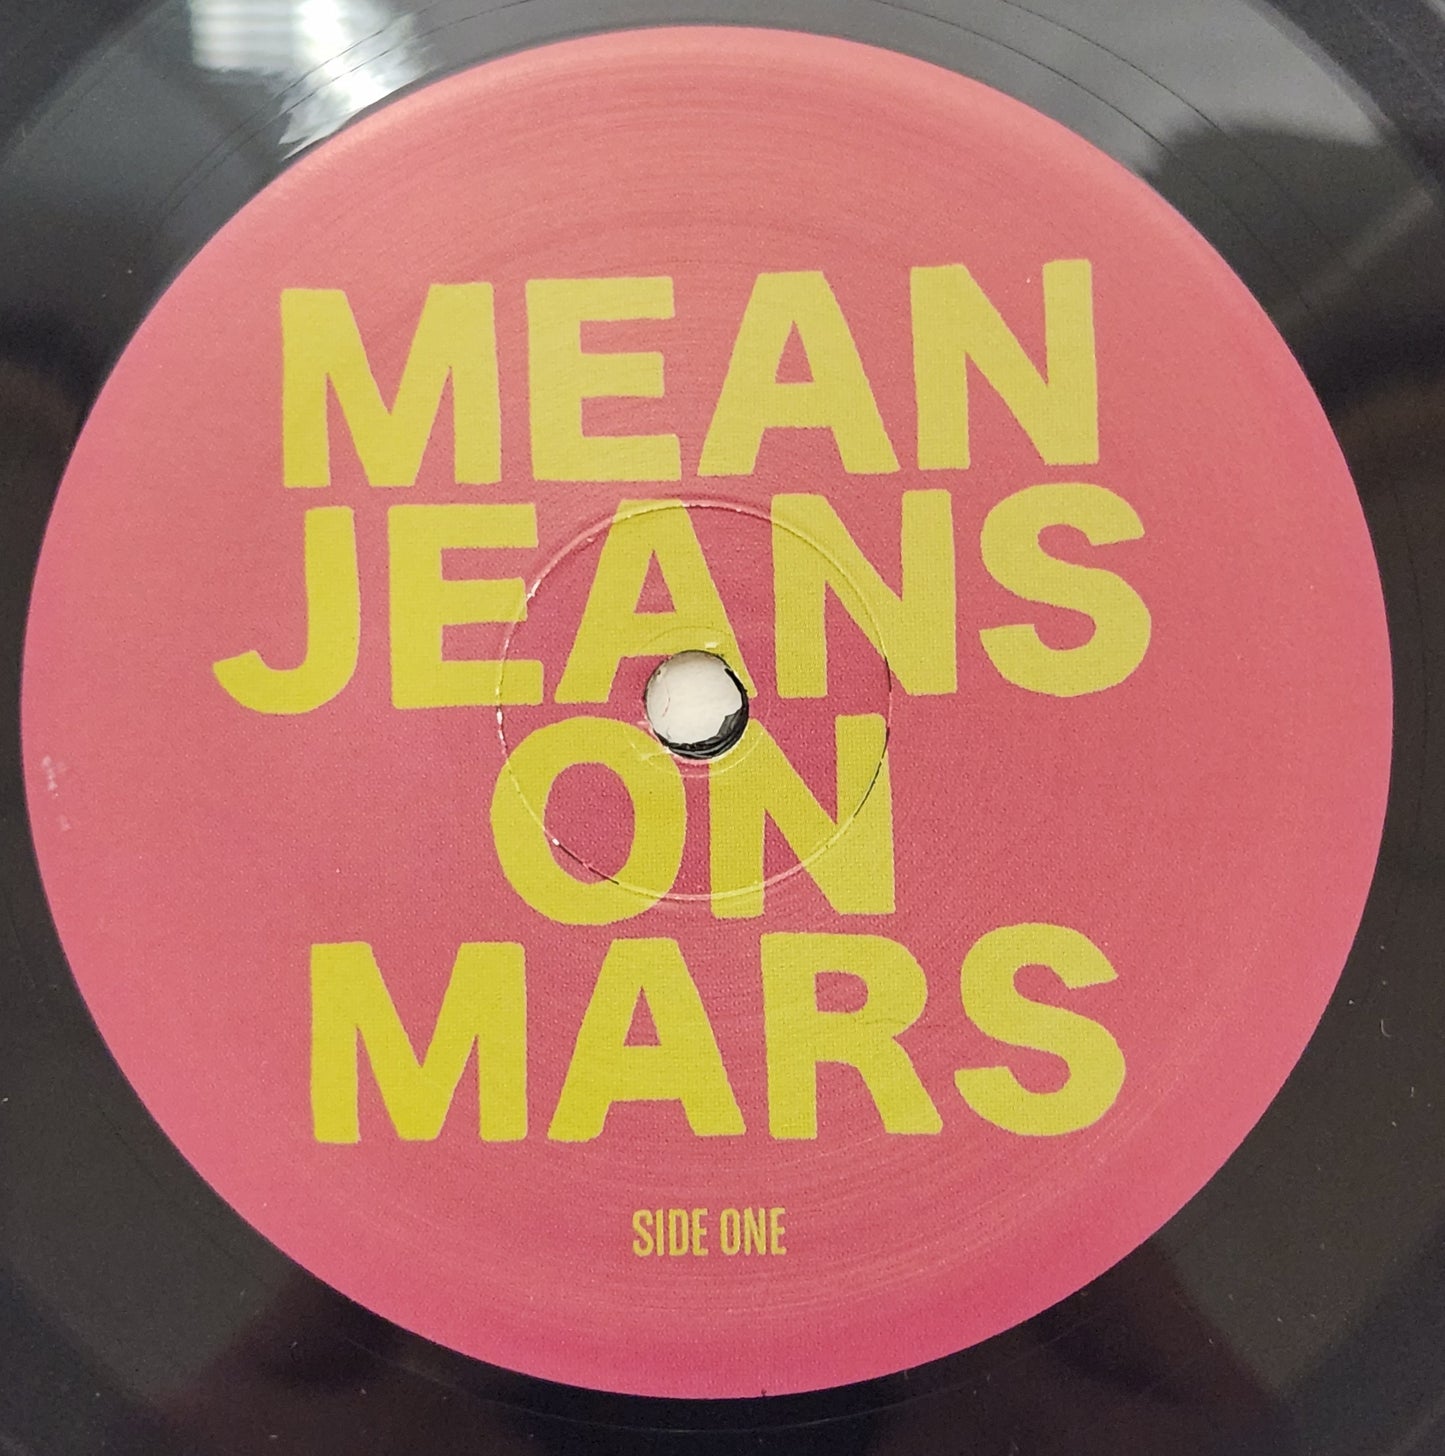 Mean Jeans "On Mars" 2012 Punk Record Album